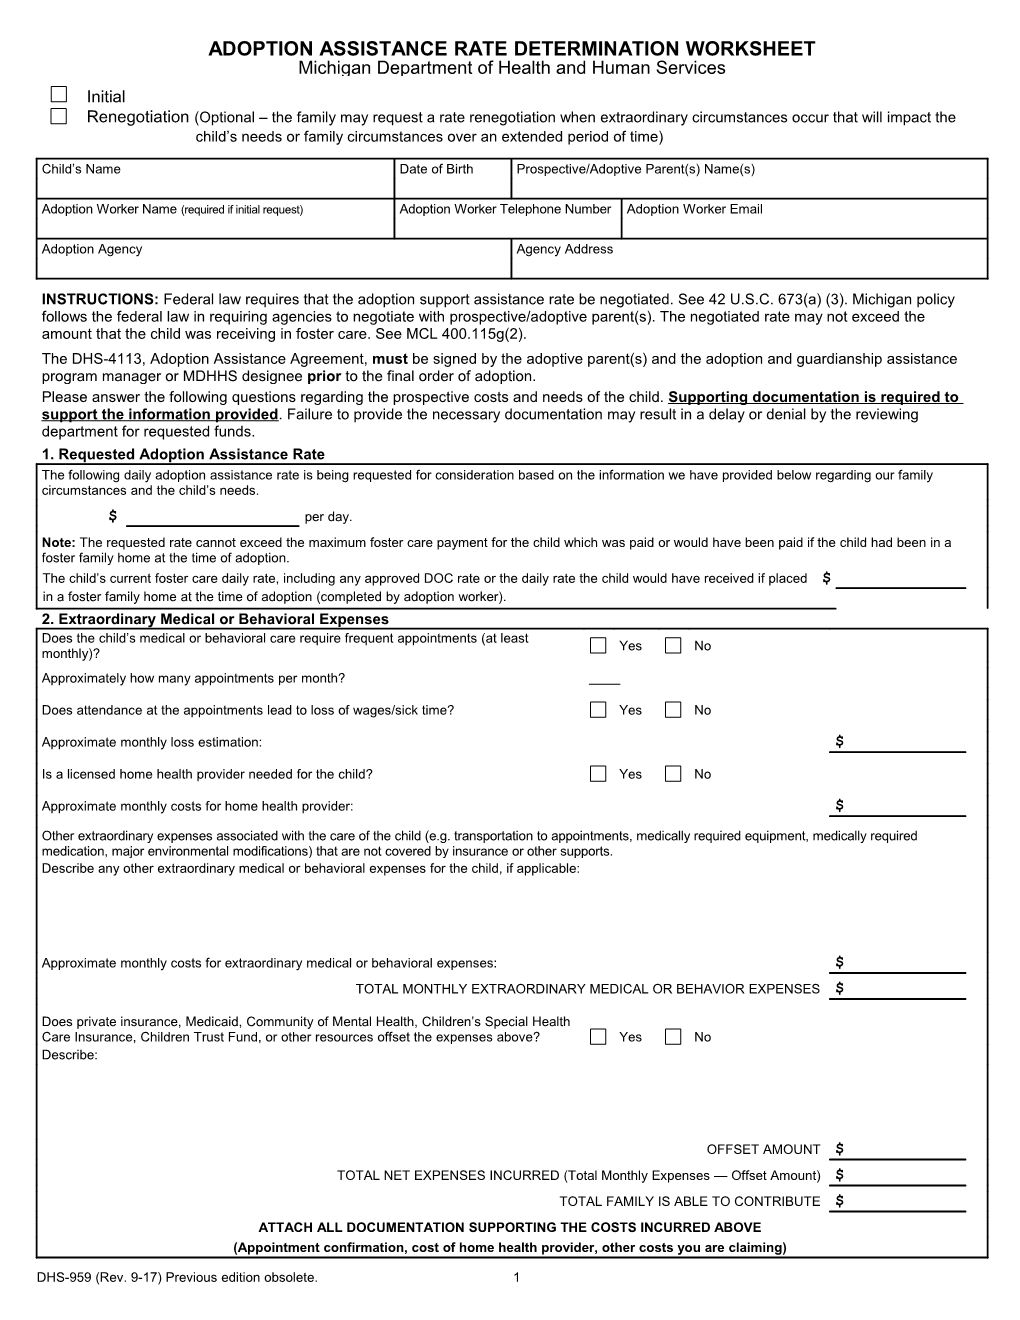 Adoption Assistance Rate/Determination Worksheet, DHS-959